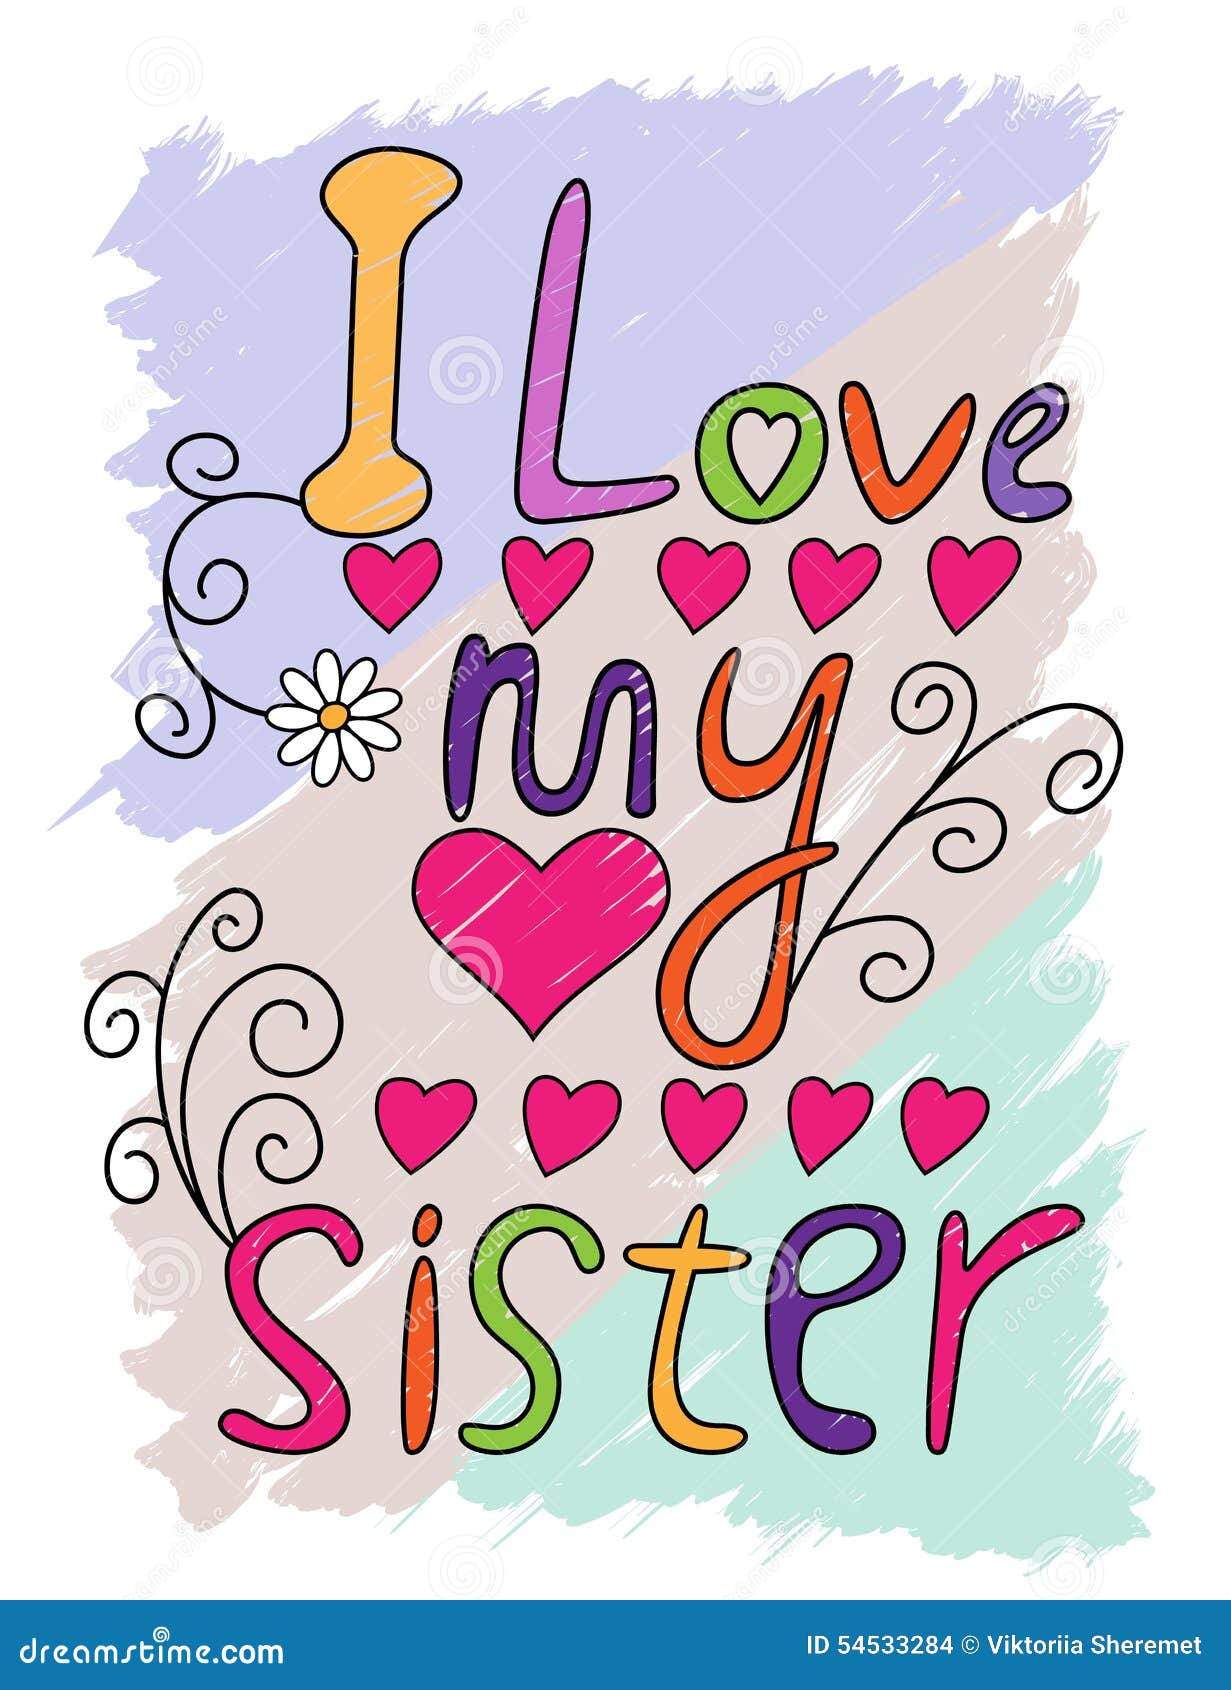 She loves sister. Систер. Люблю тебя систер. Sister надпись. Надпись i Love my sister.